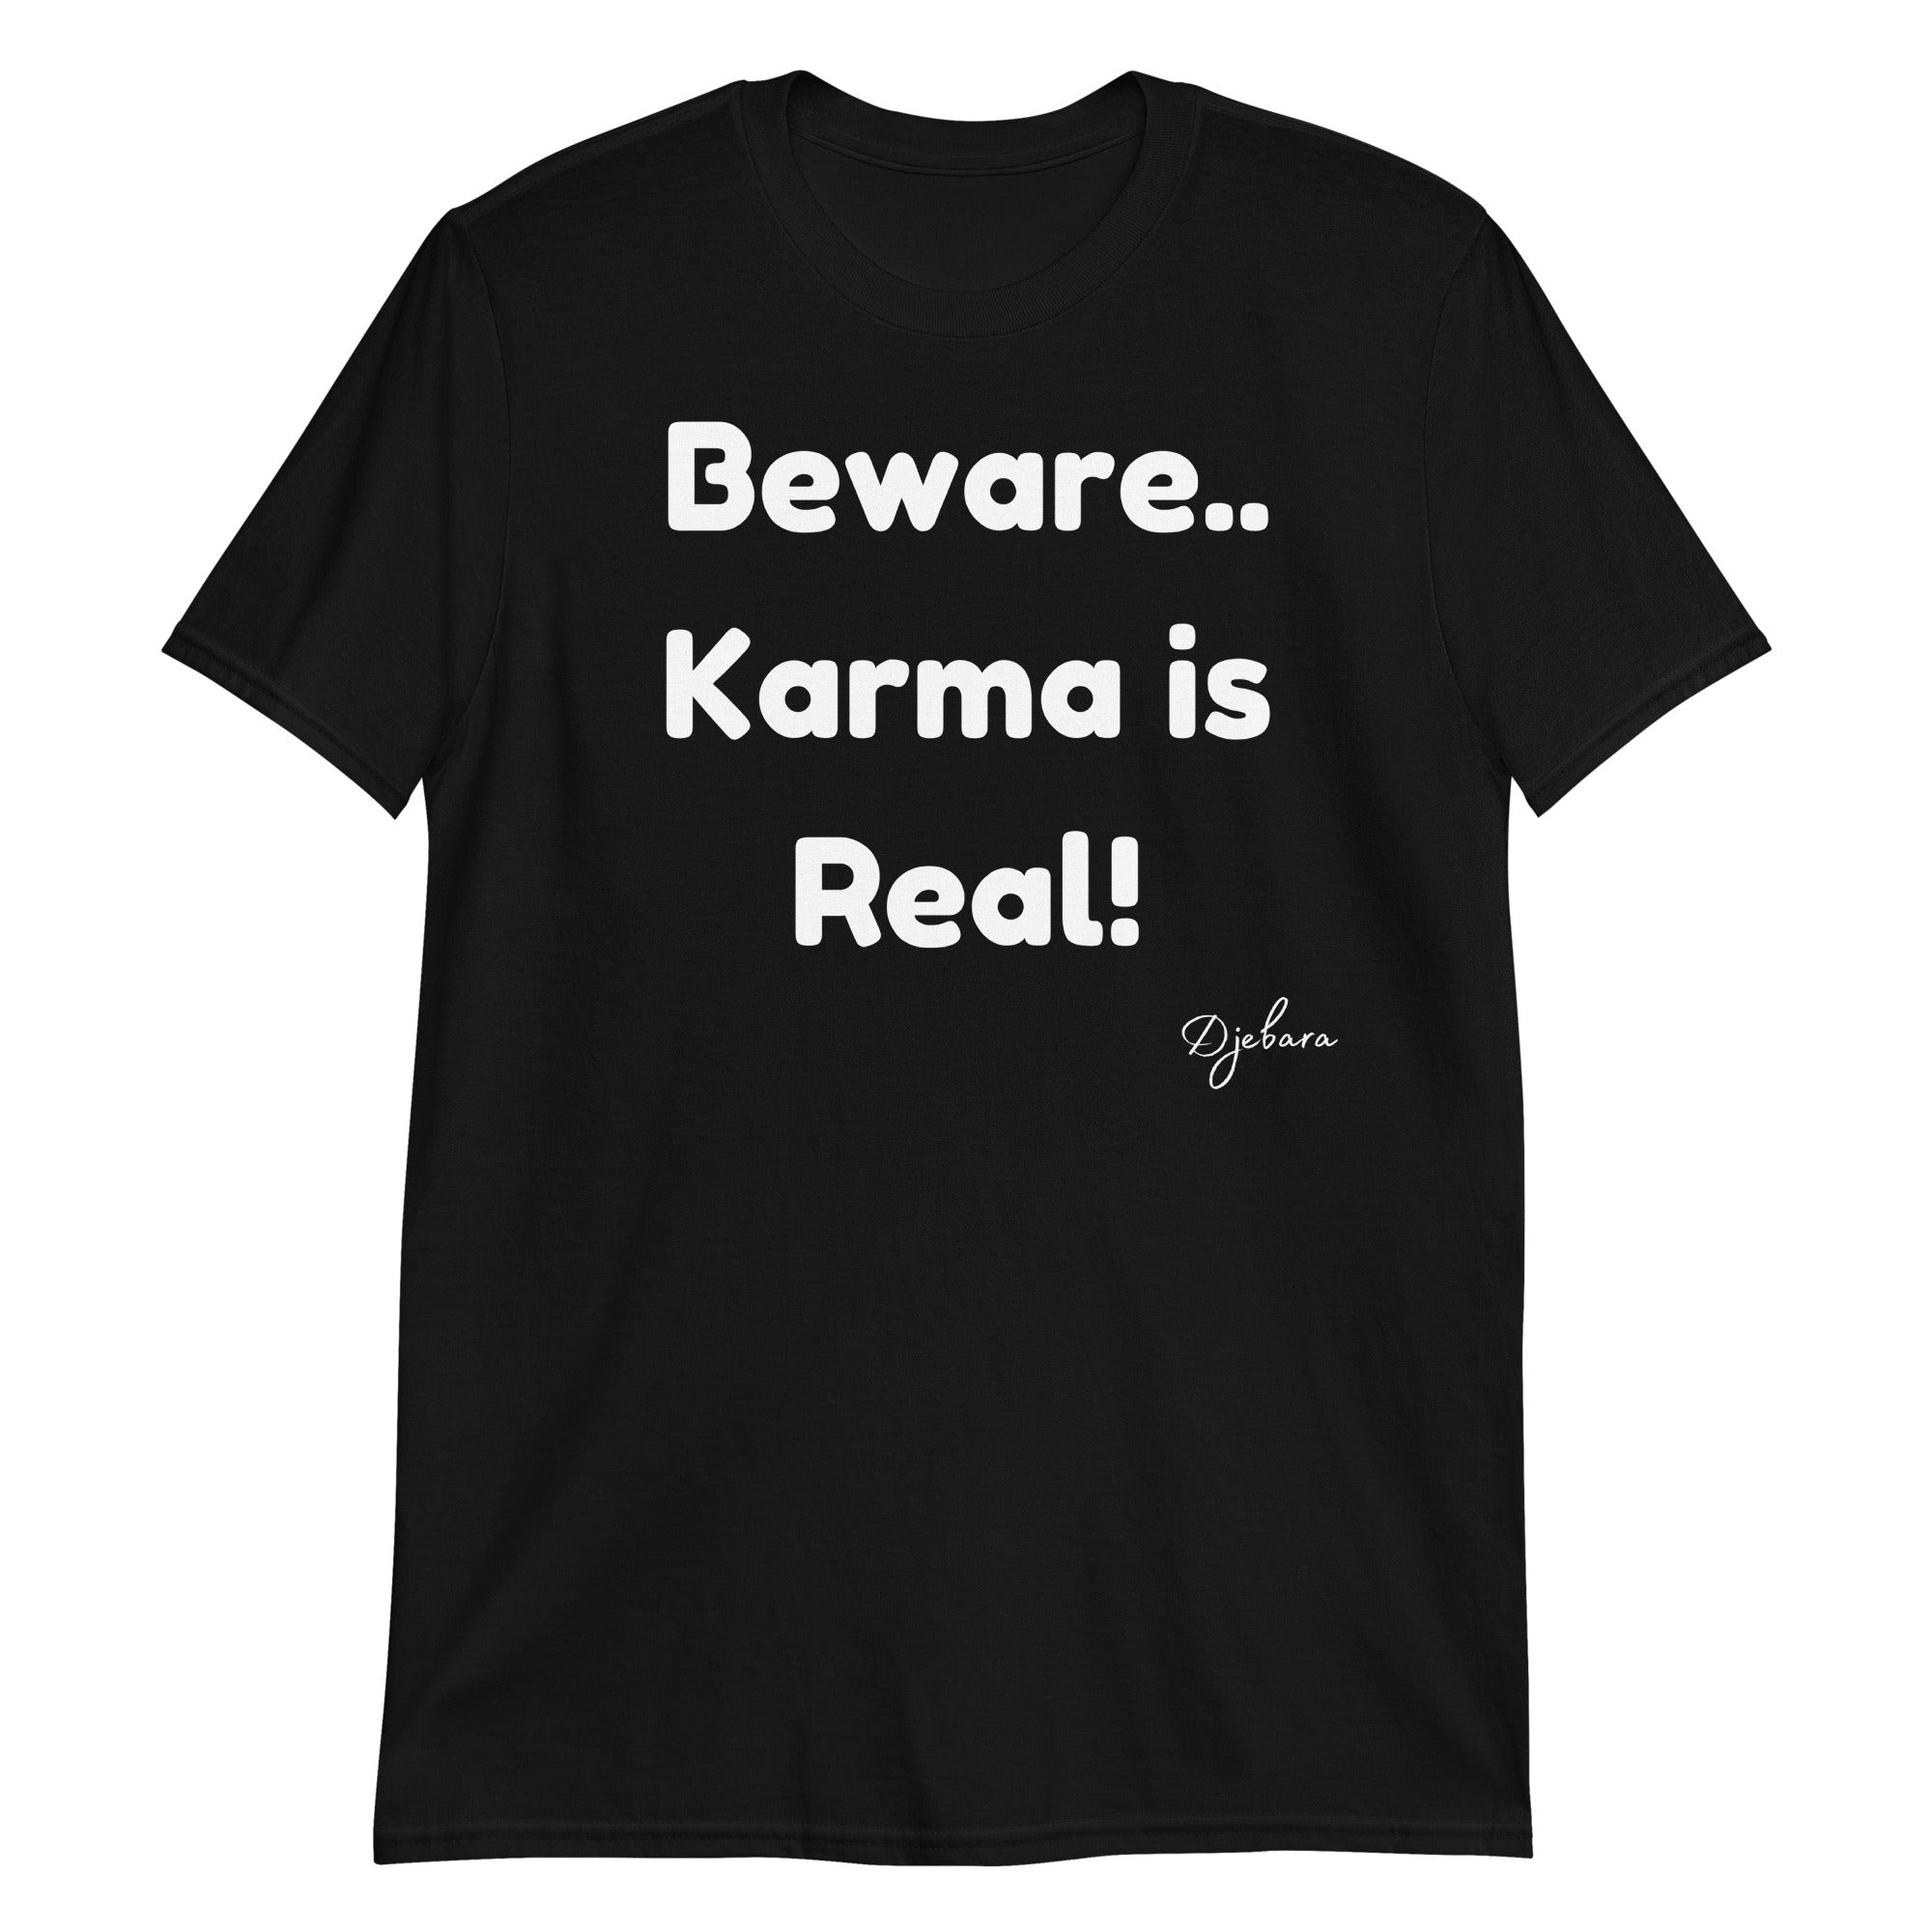 Beware... Karma is Real! Short-Sleeve Gildan Unisex T-Shirt (1) S-3XL